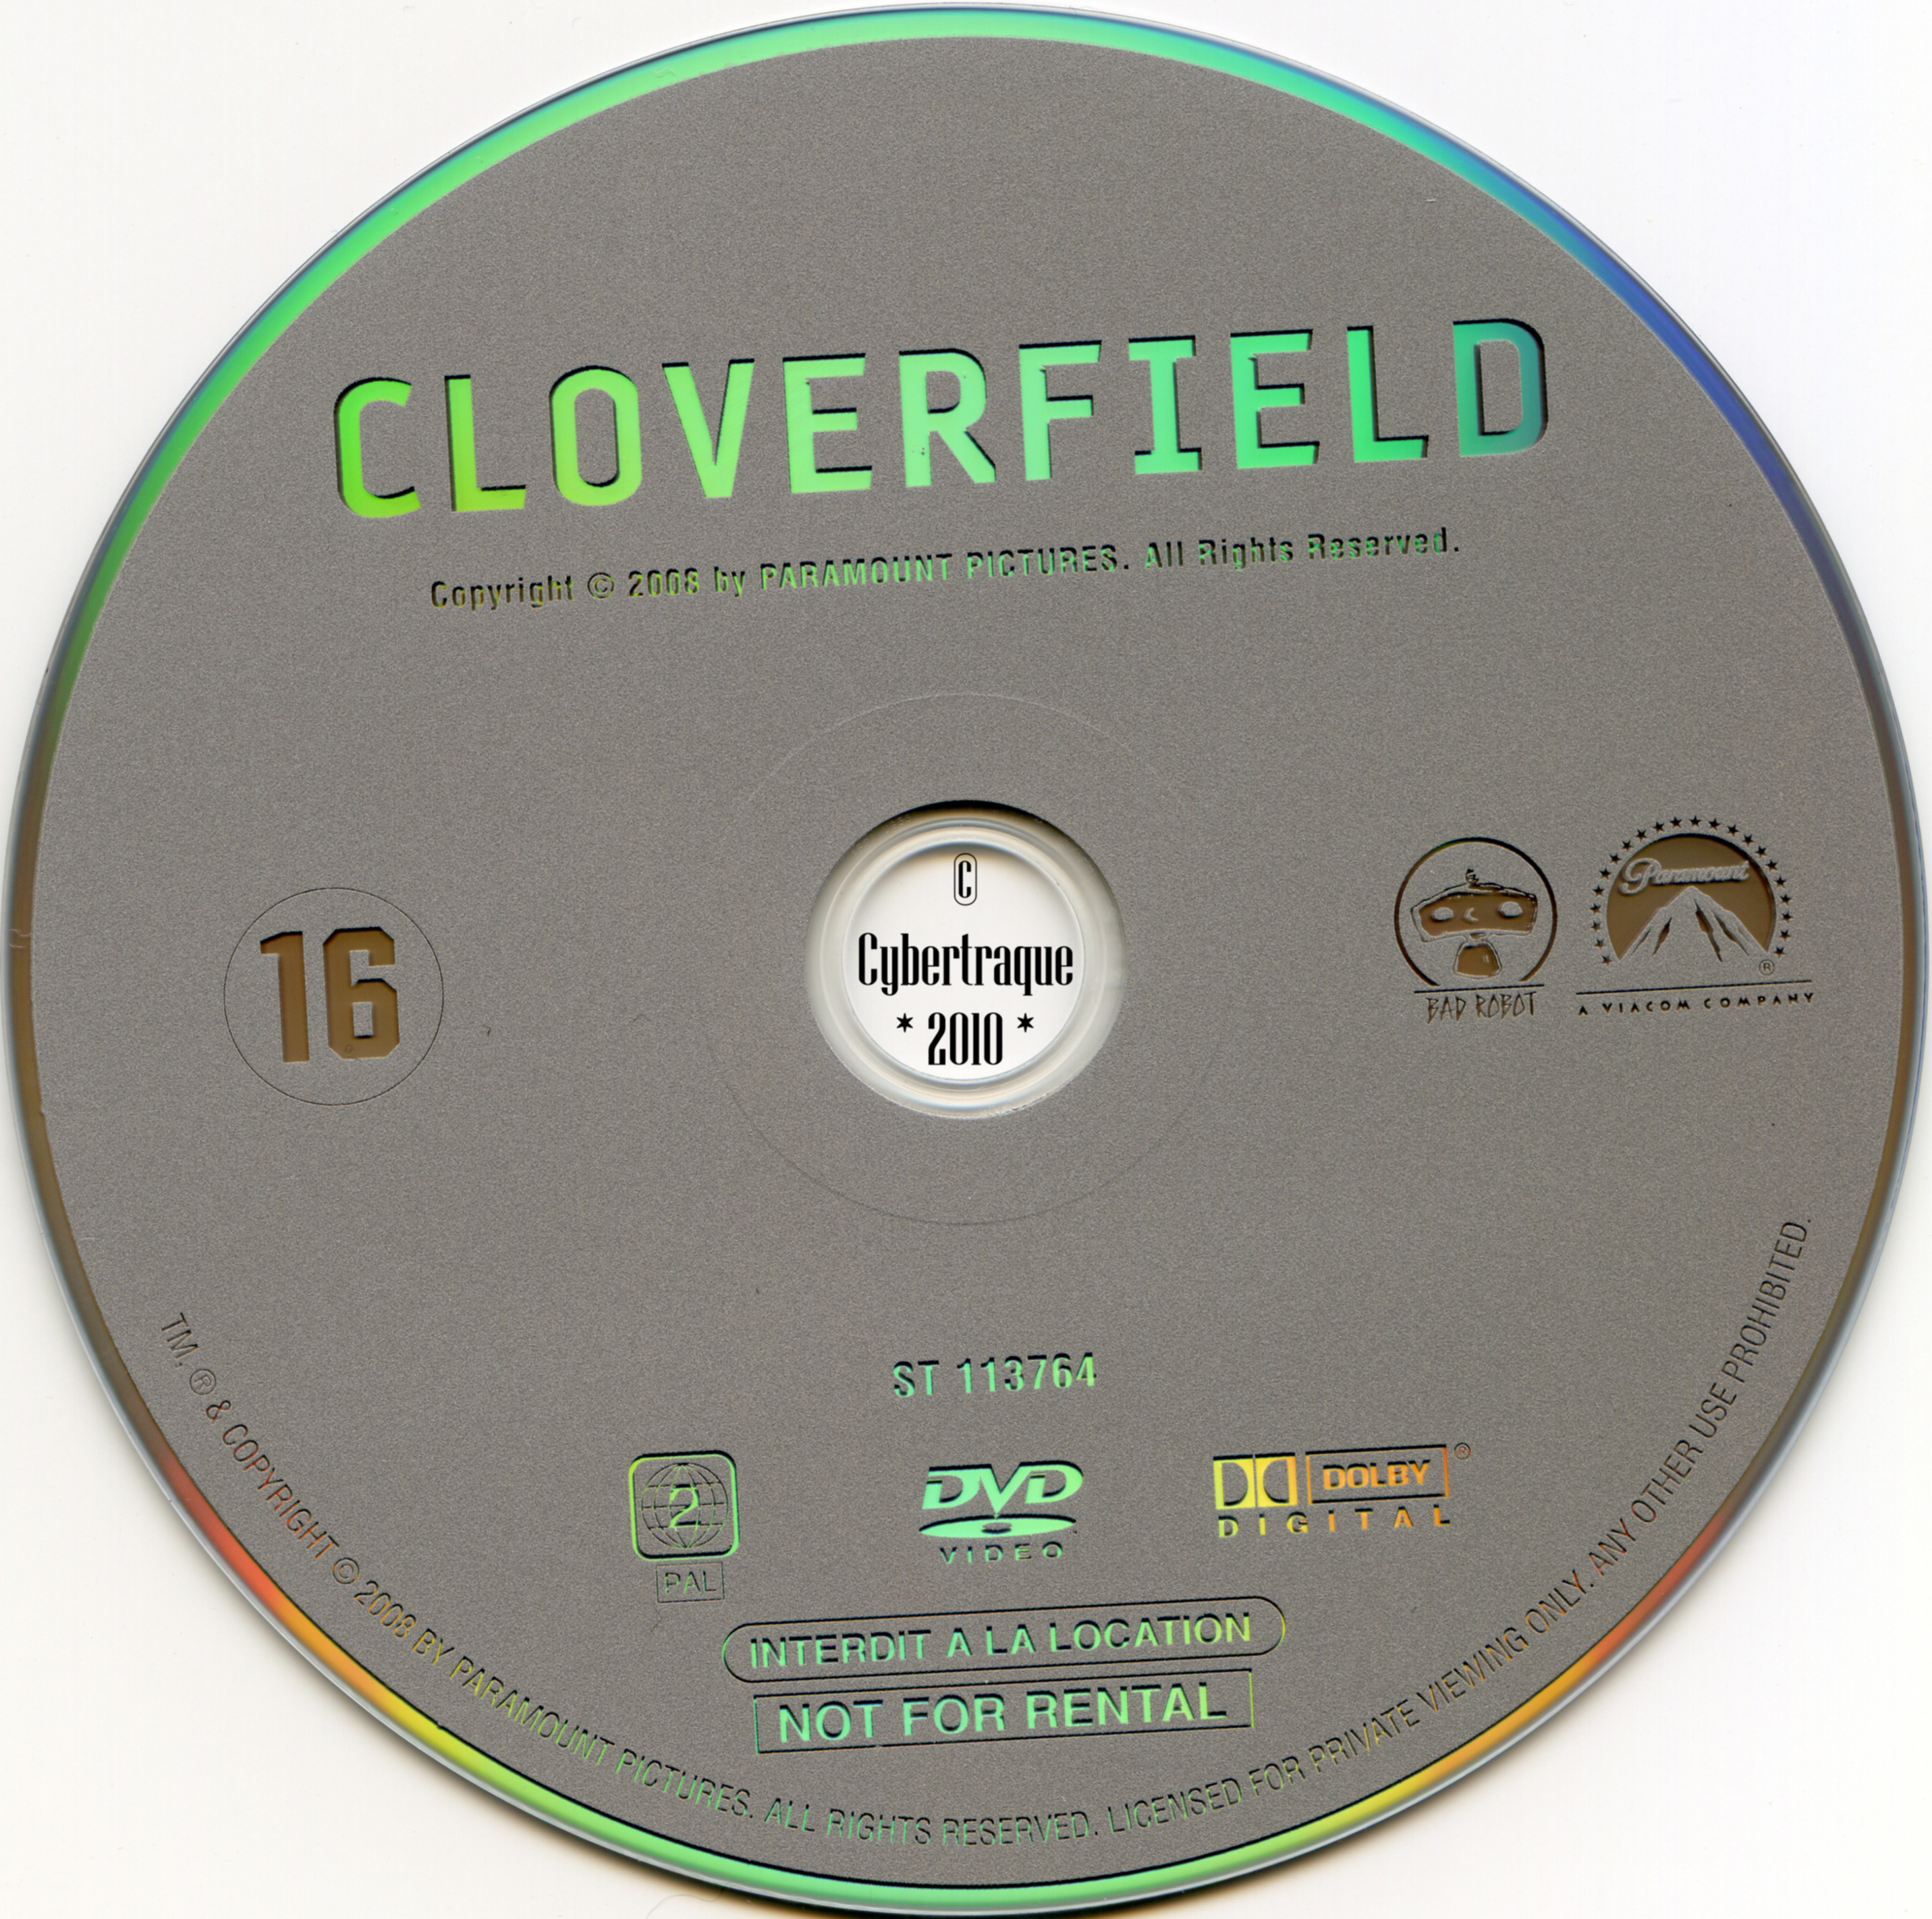 Cloverfiel v2